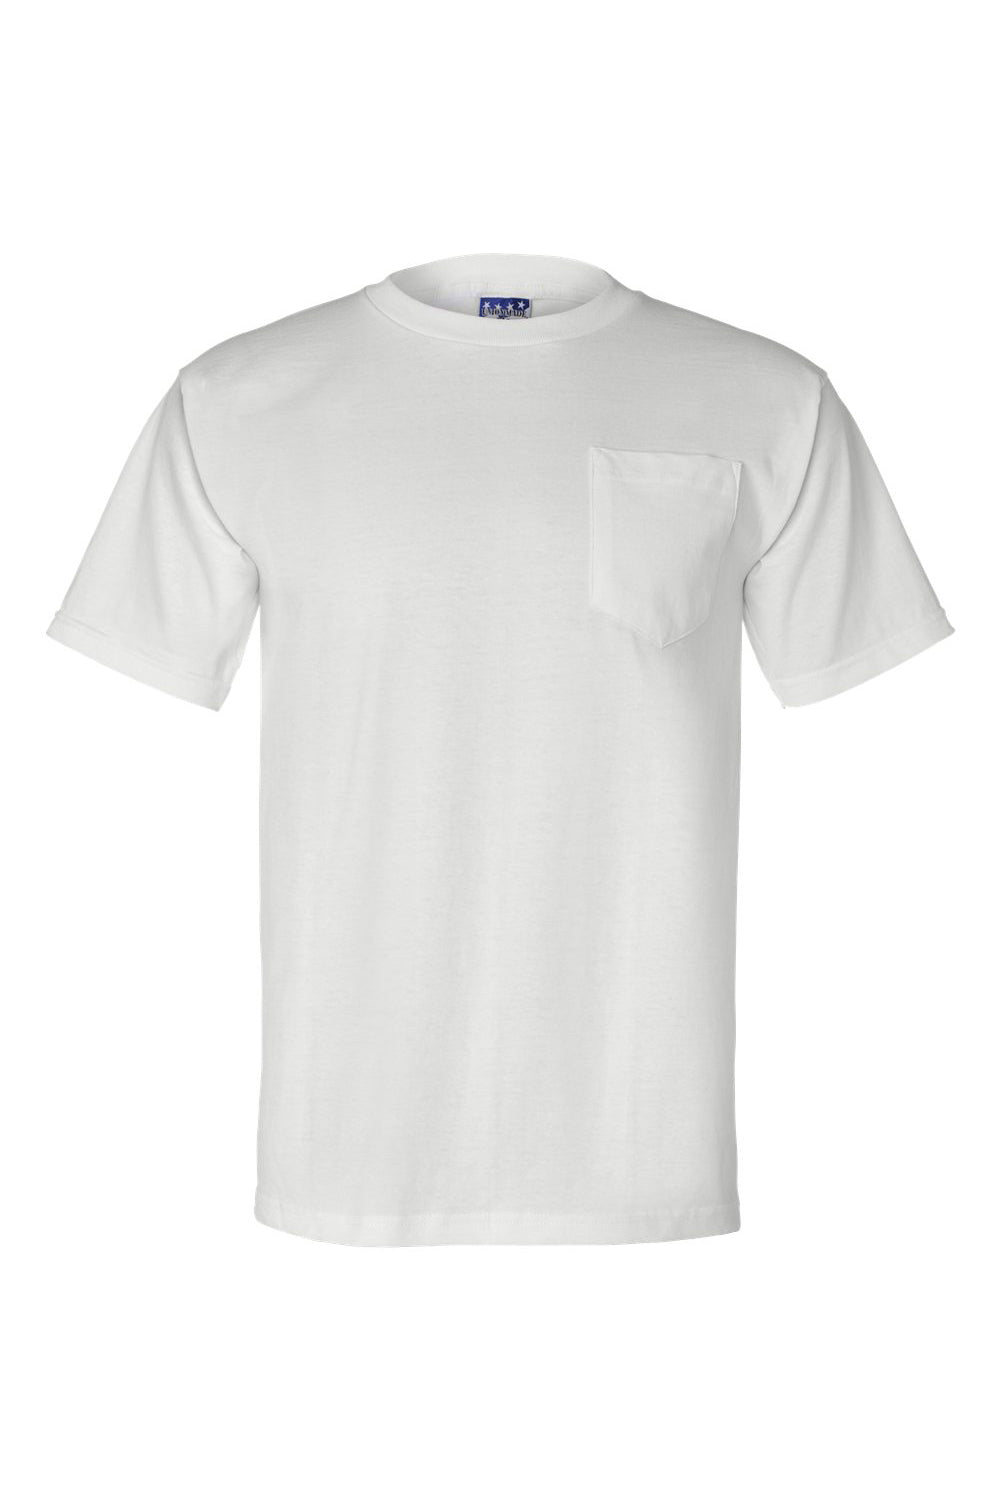 Bayside BA3015 Mens USA Made Short Sleeve Crewneck T-Shirt w/ Pocket White Flat Front